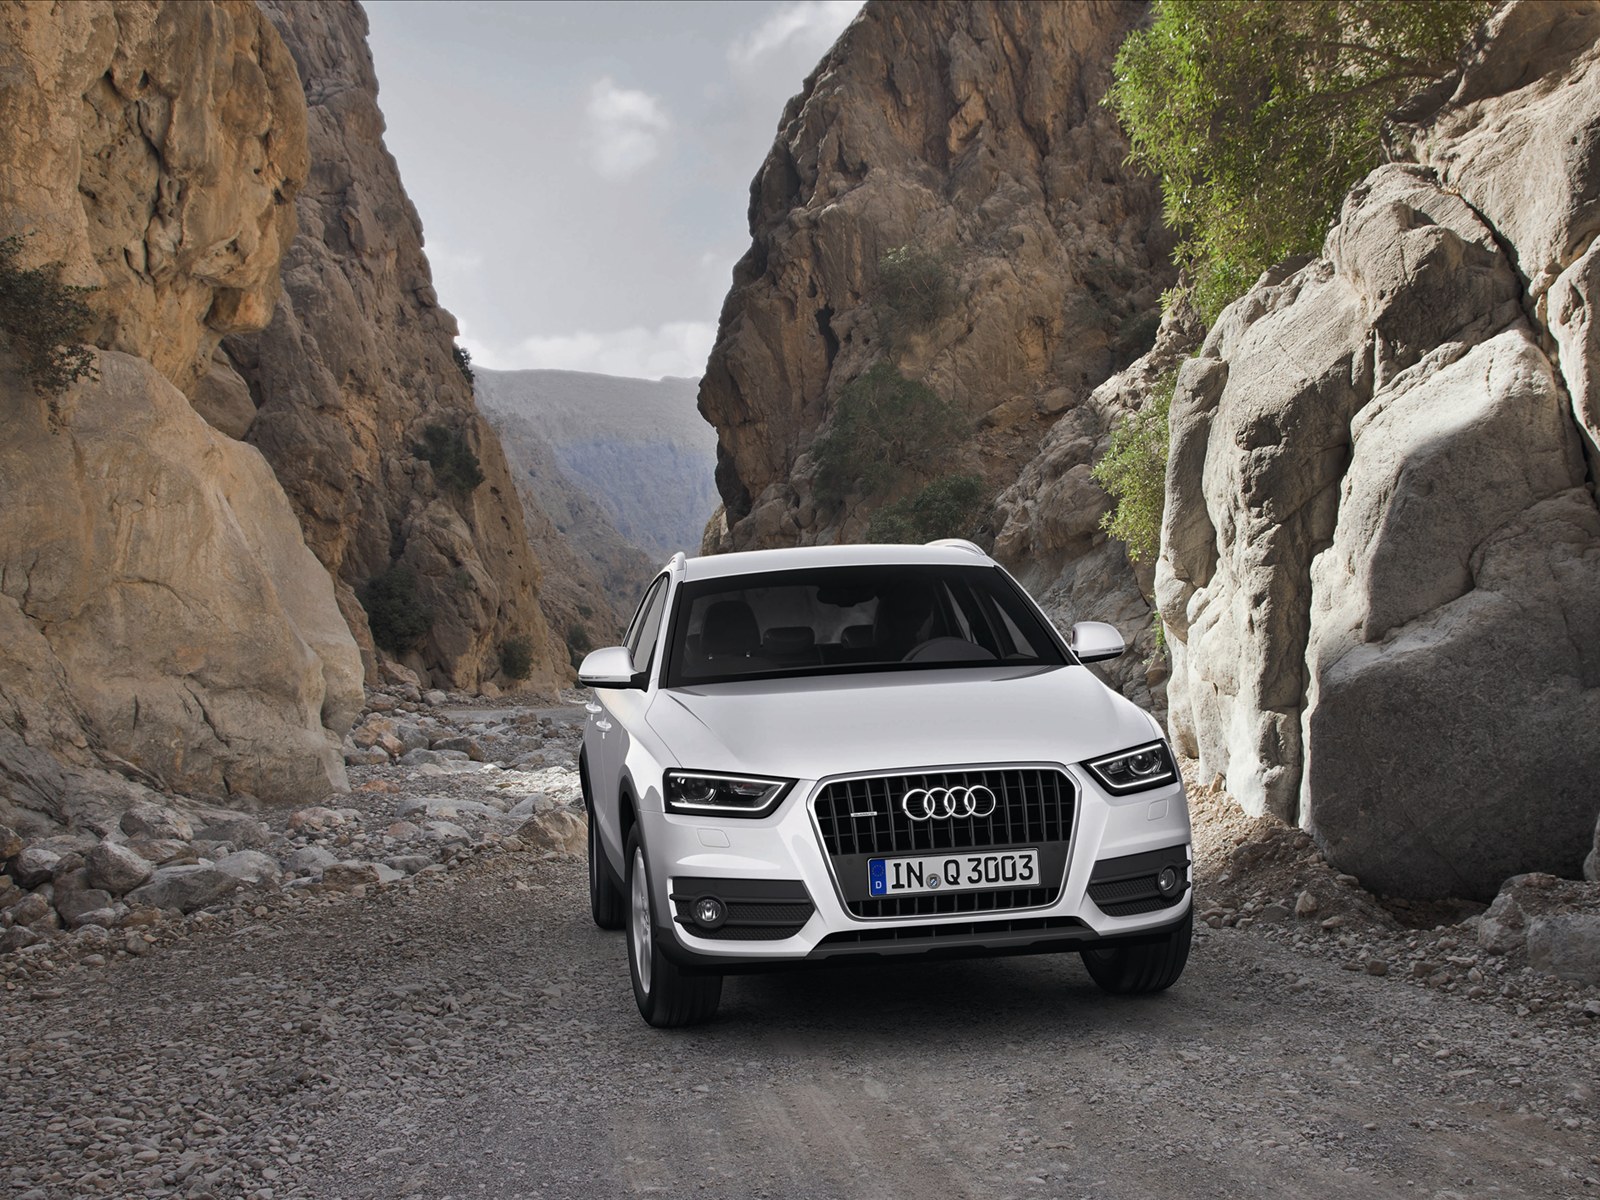 Car Pictures: Audi Q3 2012 Free desktop wallpapers backgrounds